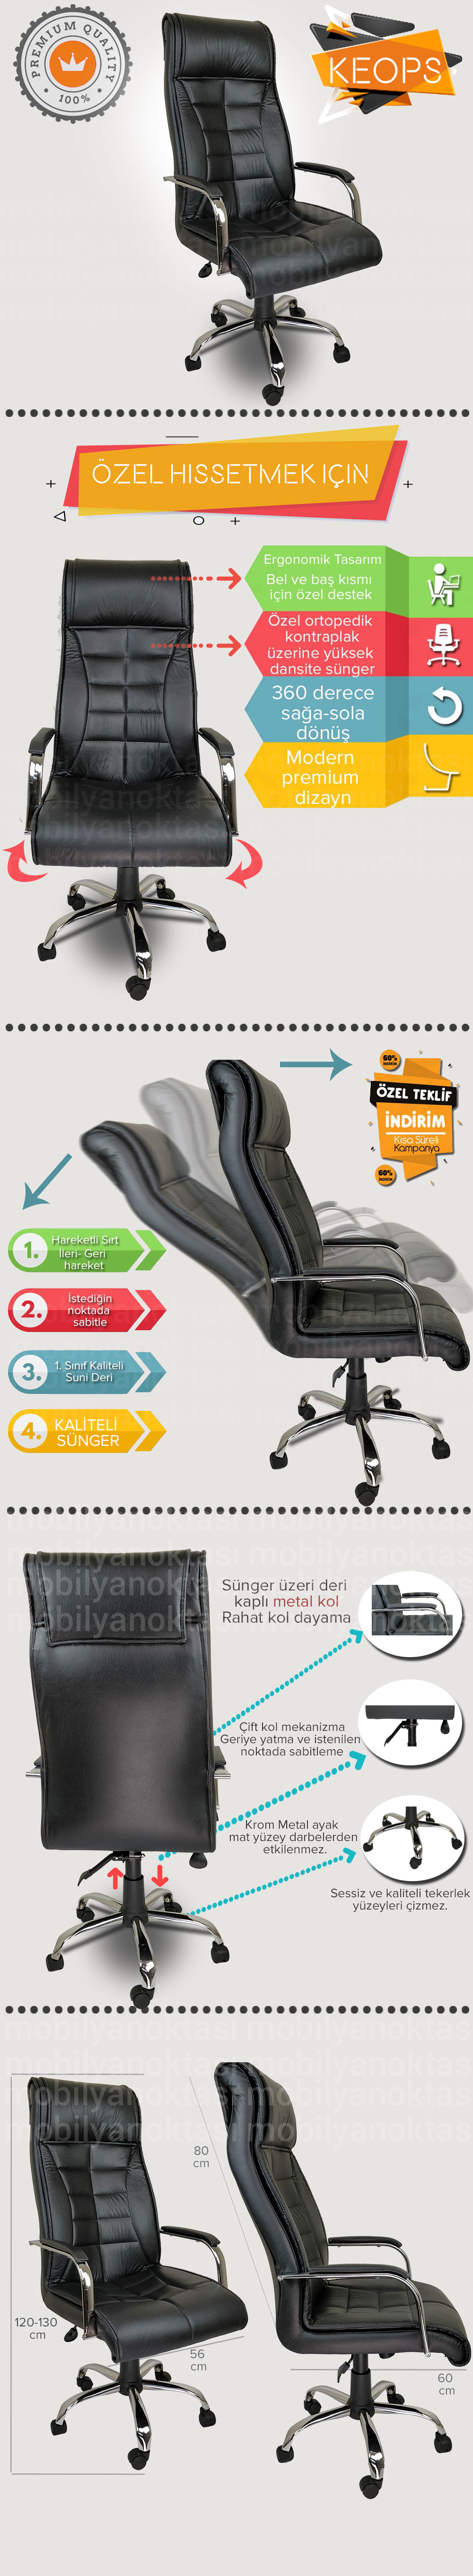 keops ofis koltuğu infografik